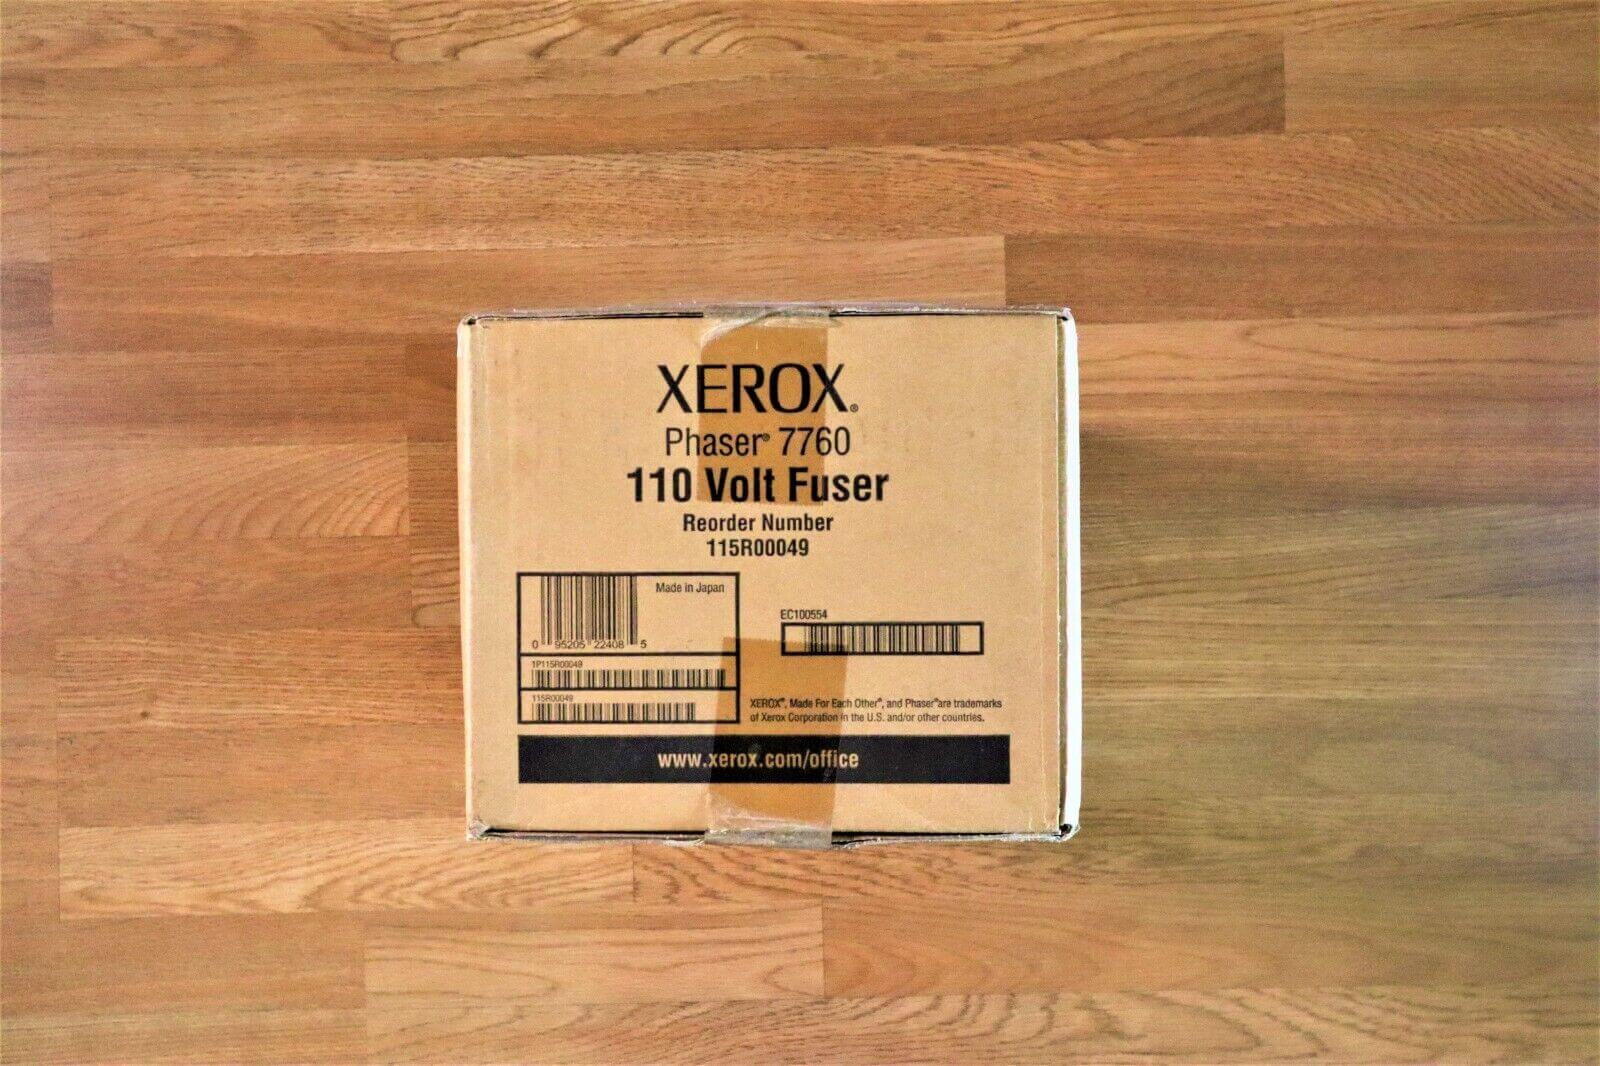 Genuine Xerox Phaser 7760 110v Fuser 115R00049 Color Laser Printer Same Day Ship - copier-clearance-center